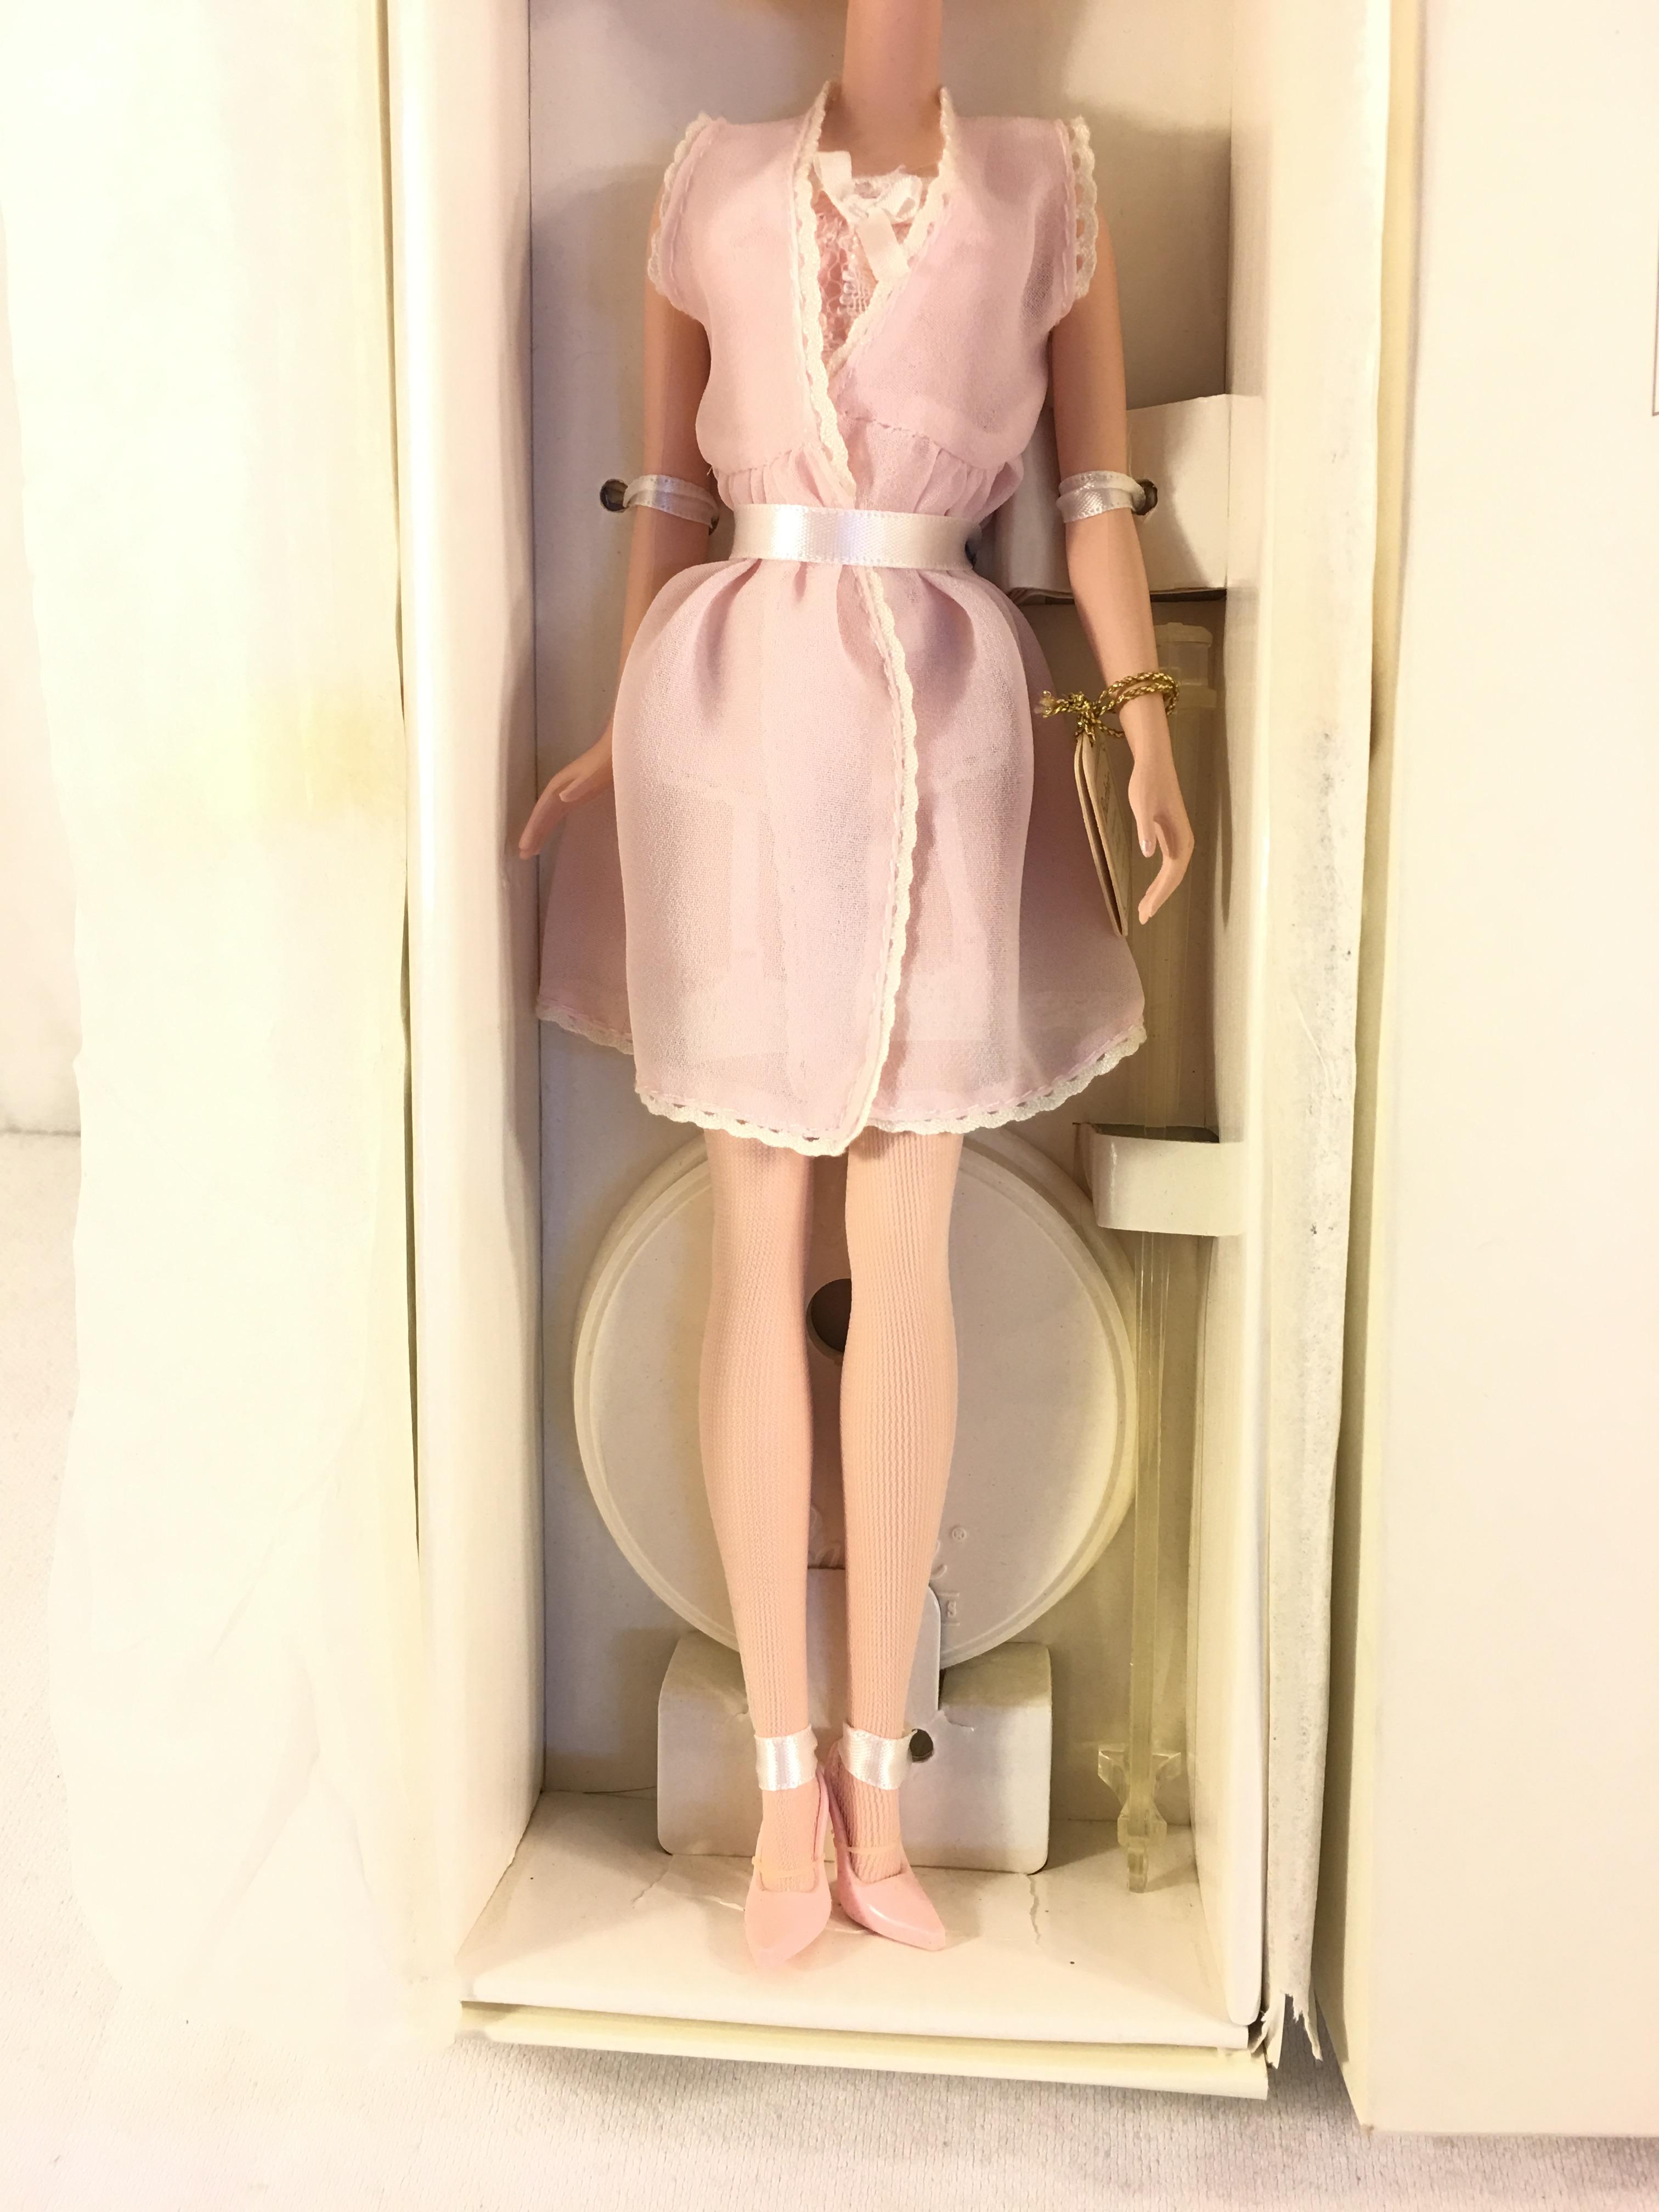 NIB Collector Genuine Silkstone Body Lingerie Fashion Model Barbie Doll Box: 13.5"x4.5"